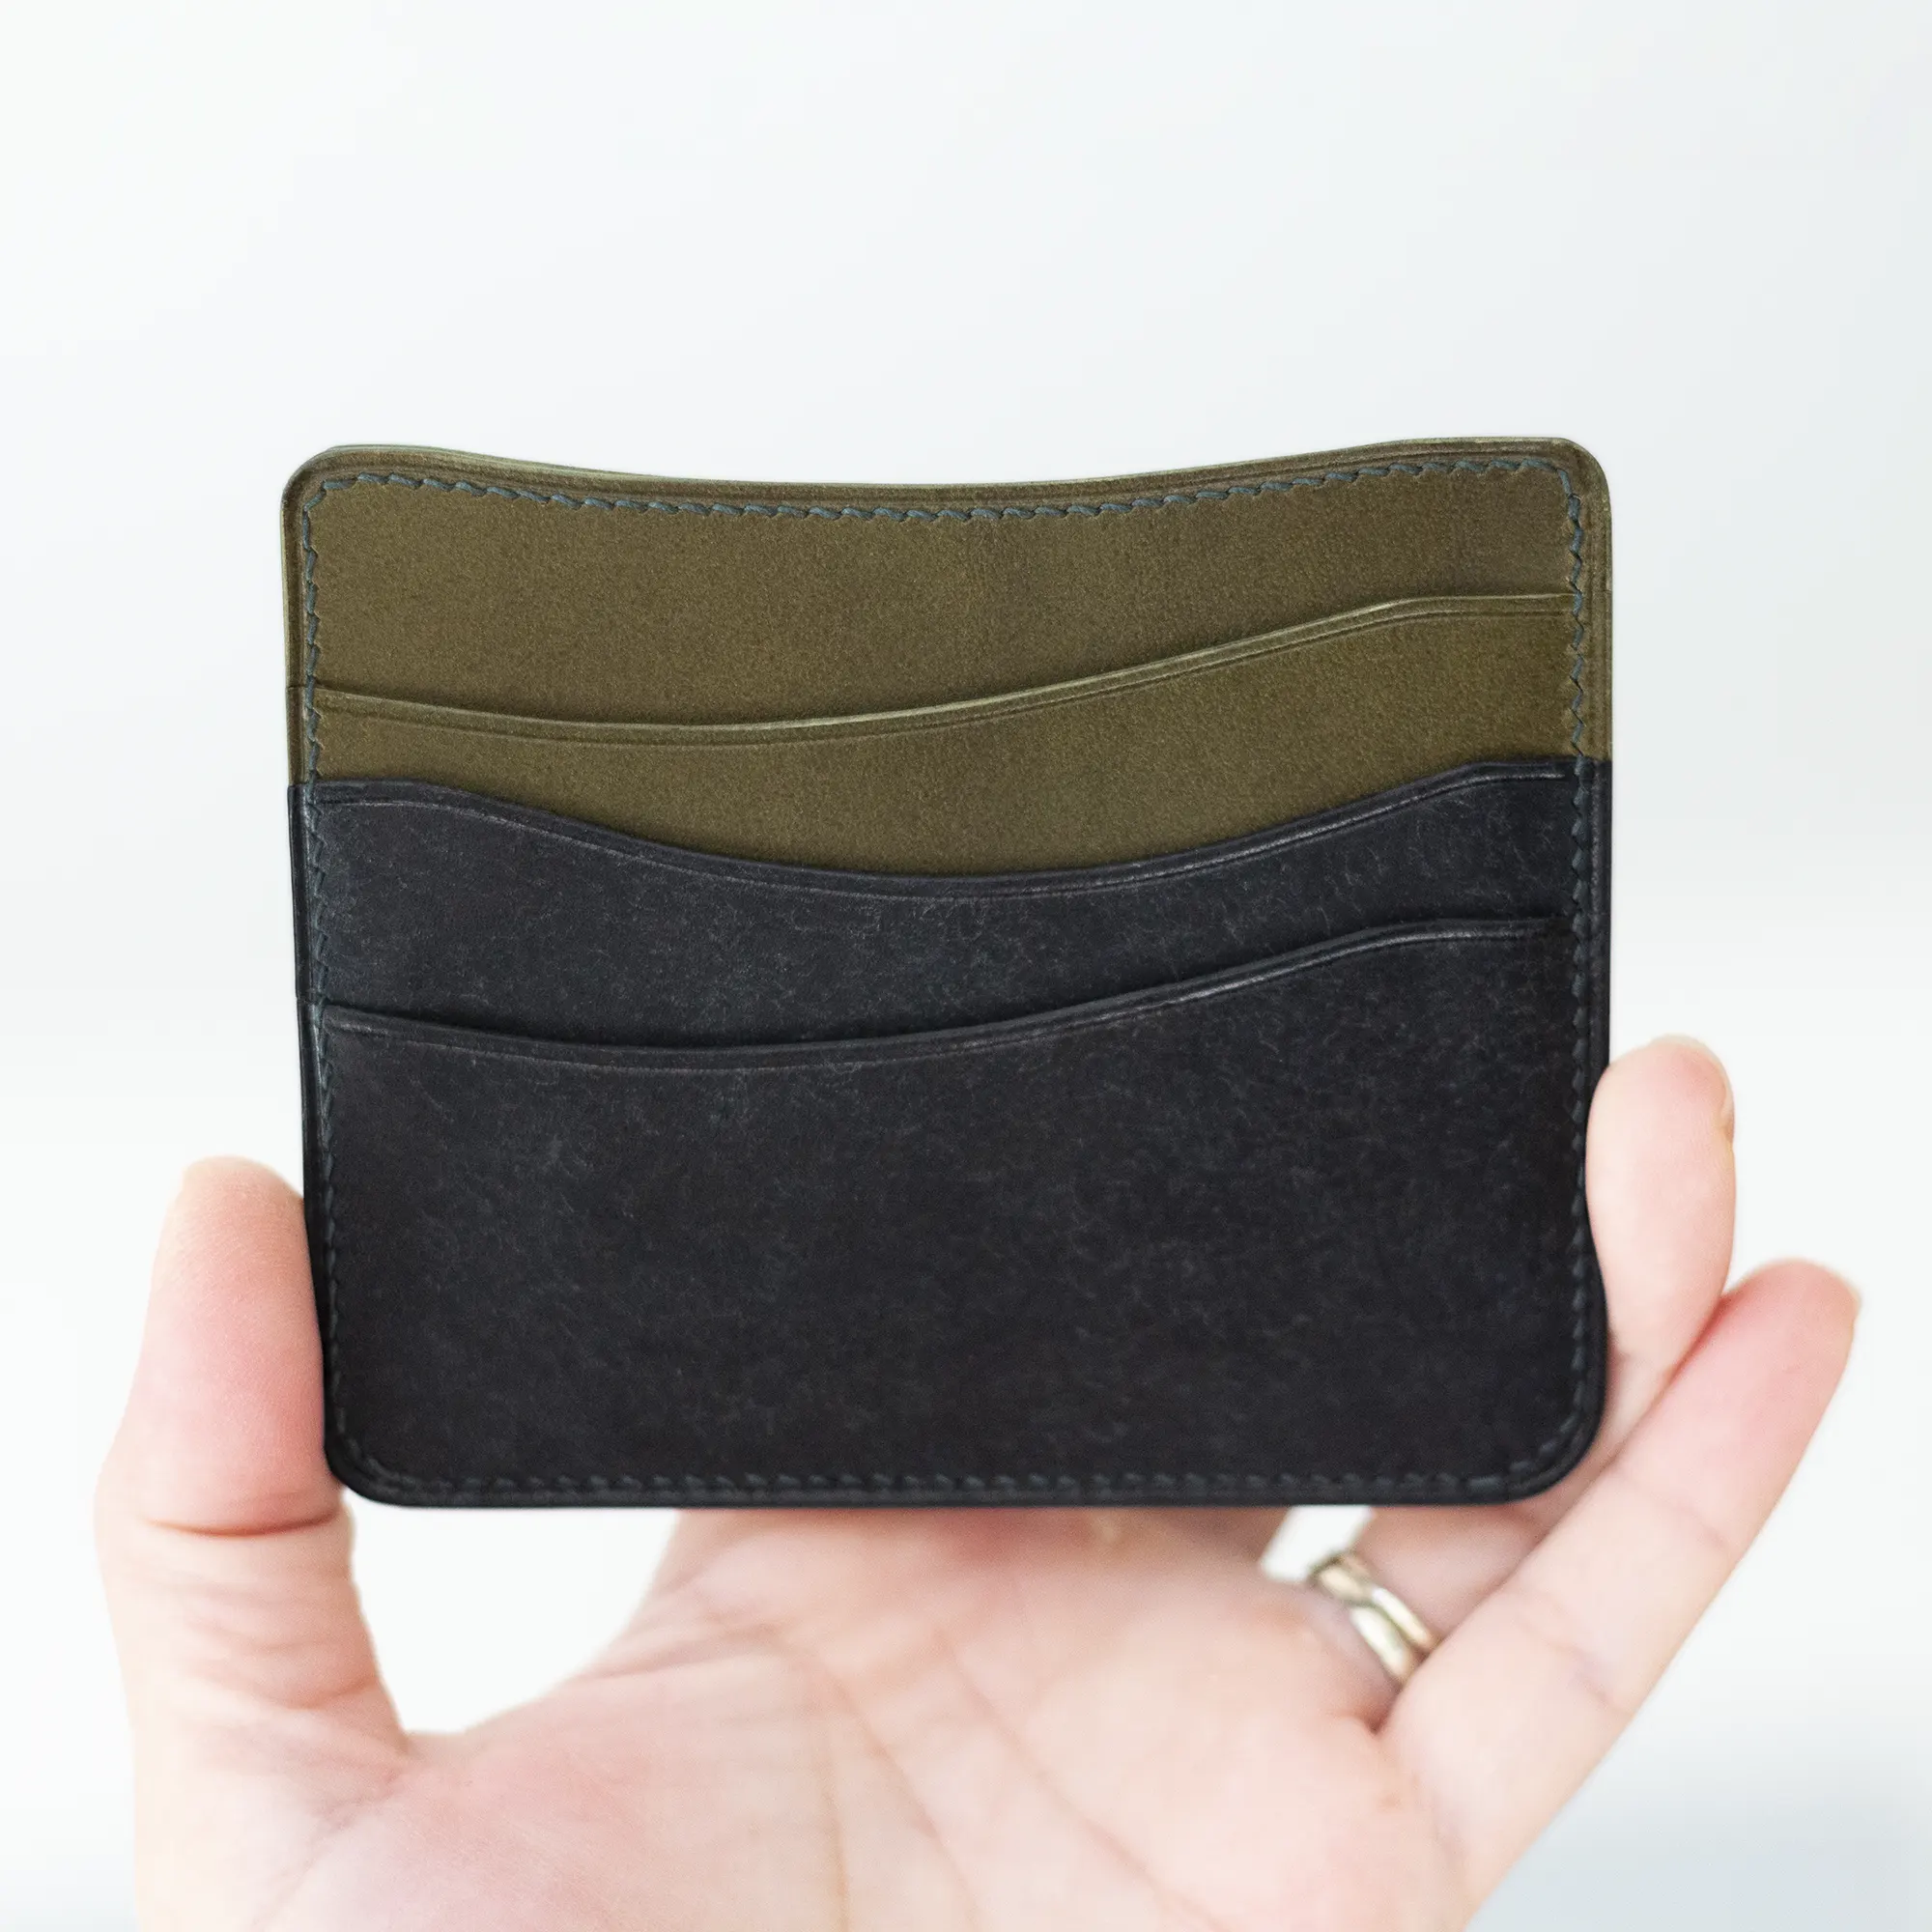 leather wallet handmade in spain olive green black